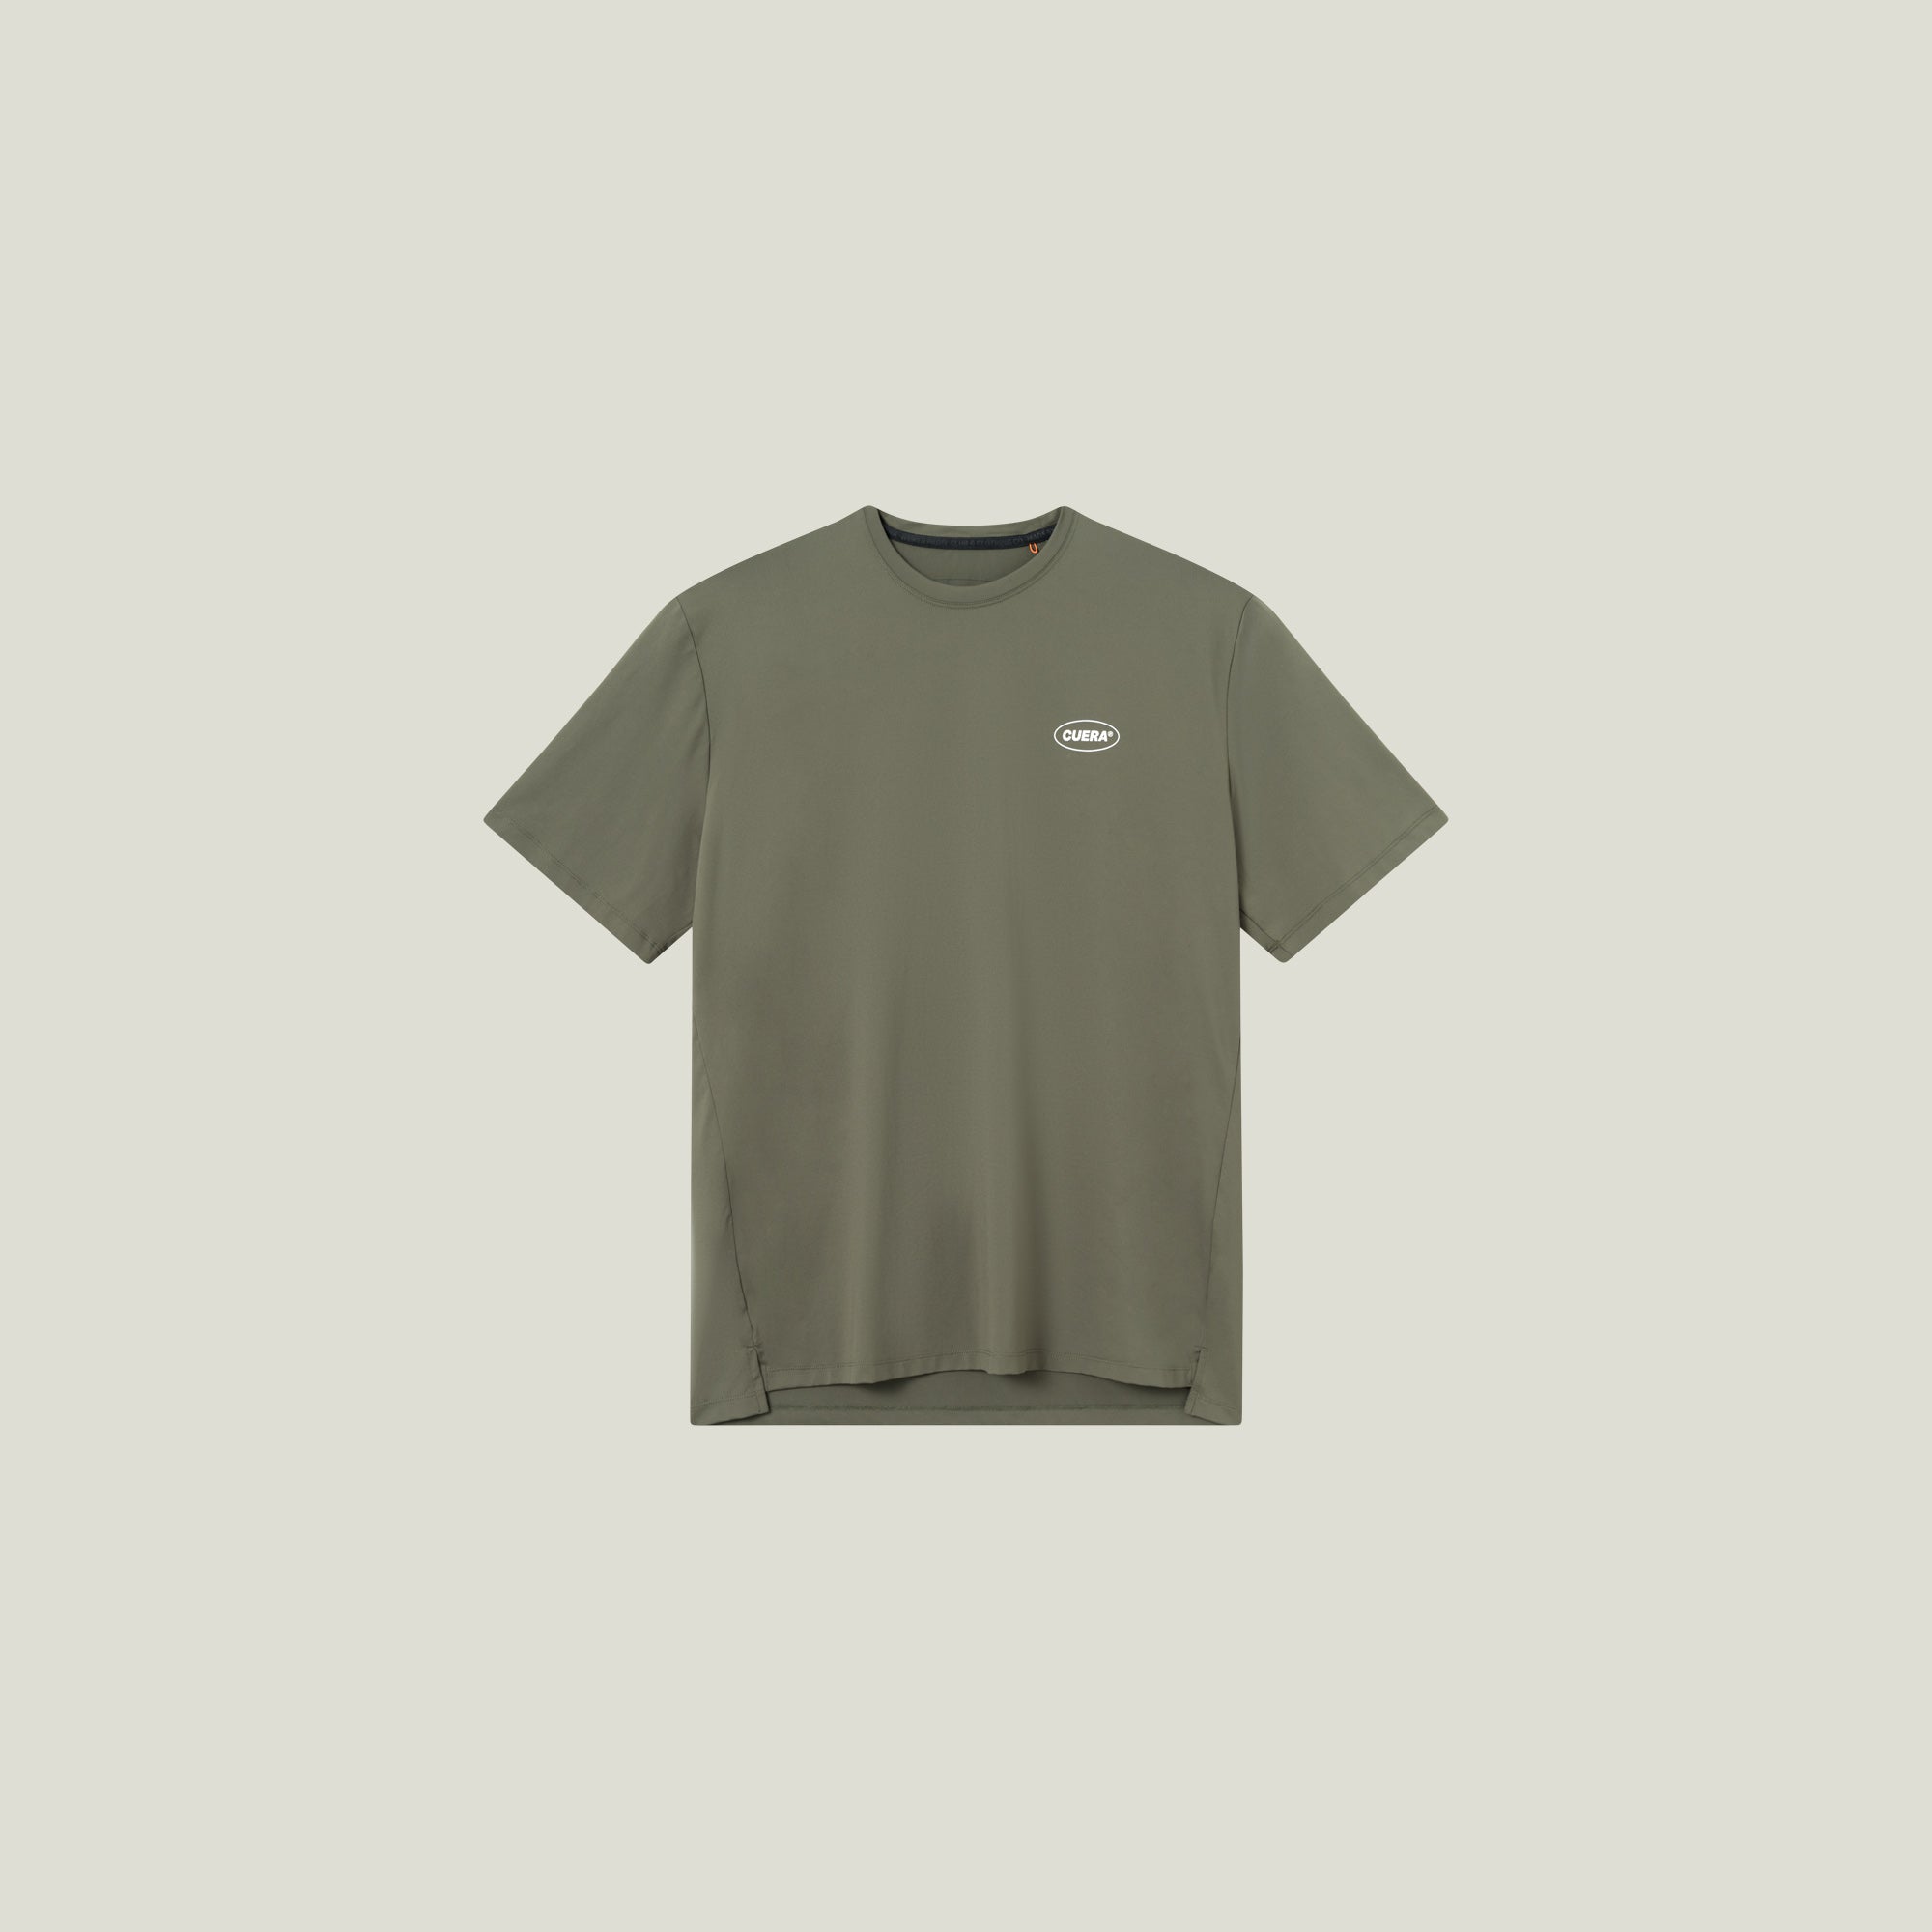 Se Cuera Oncourt Made T-shirt (Army) - XL hos Padellife